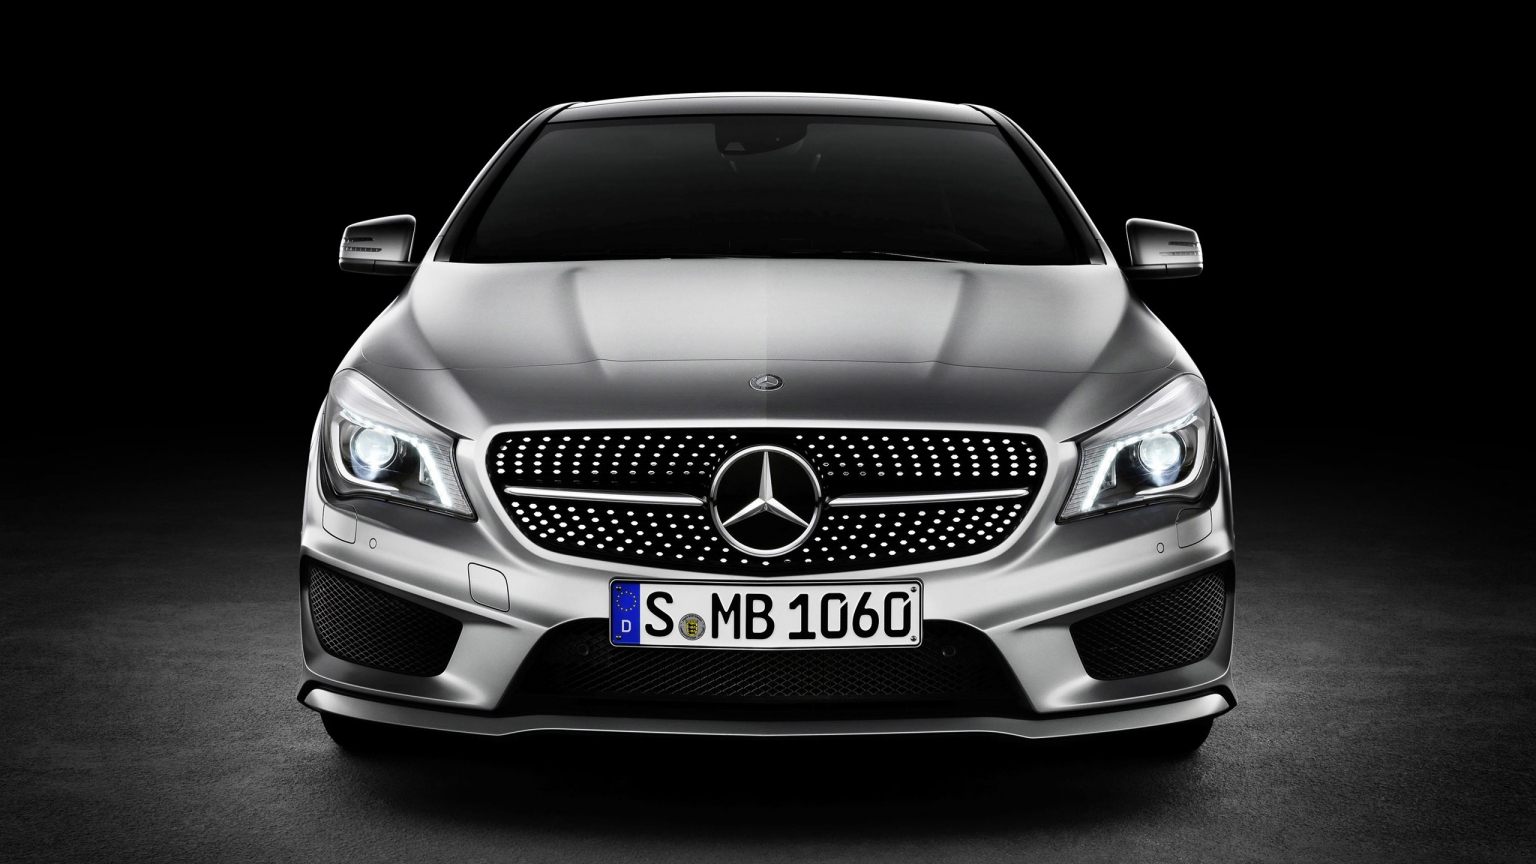 Mercedes Benz CLA Class Studio for 1536 x 864 HDTV resolution